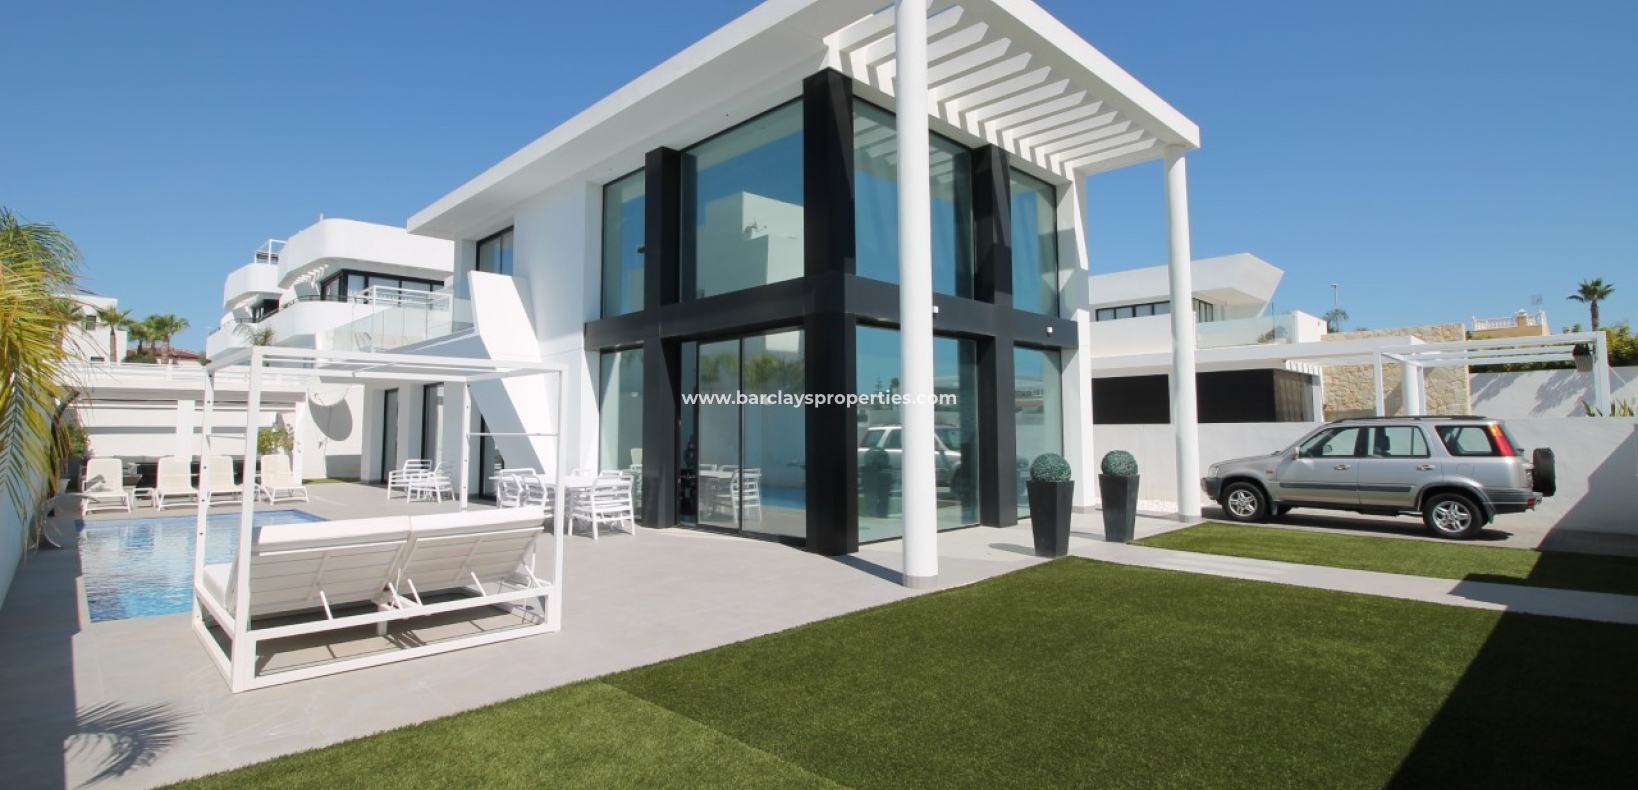 Garden - Modern villa for sale in urbanisation La Marina